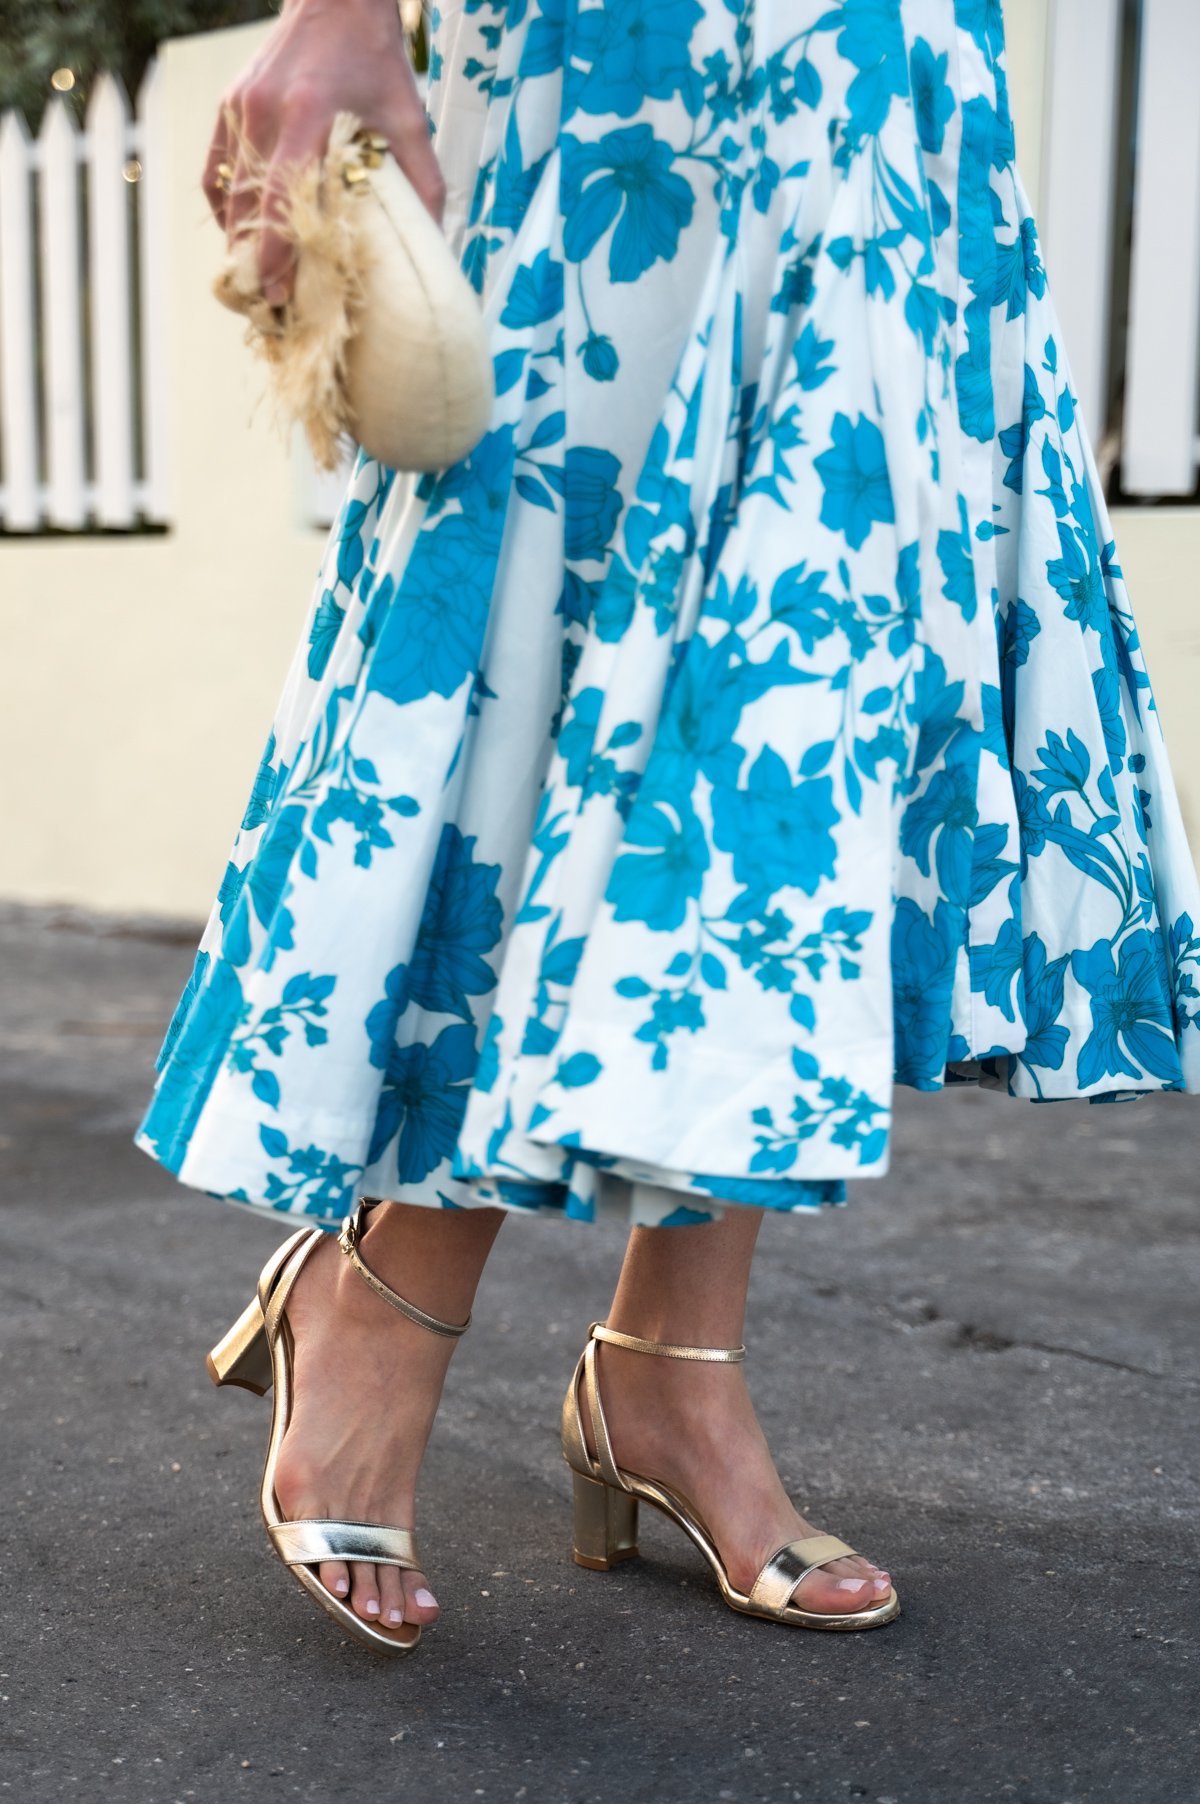 Stacie Flinner MISA blue floral dress Bahamas-7.jpg